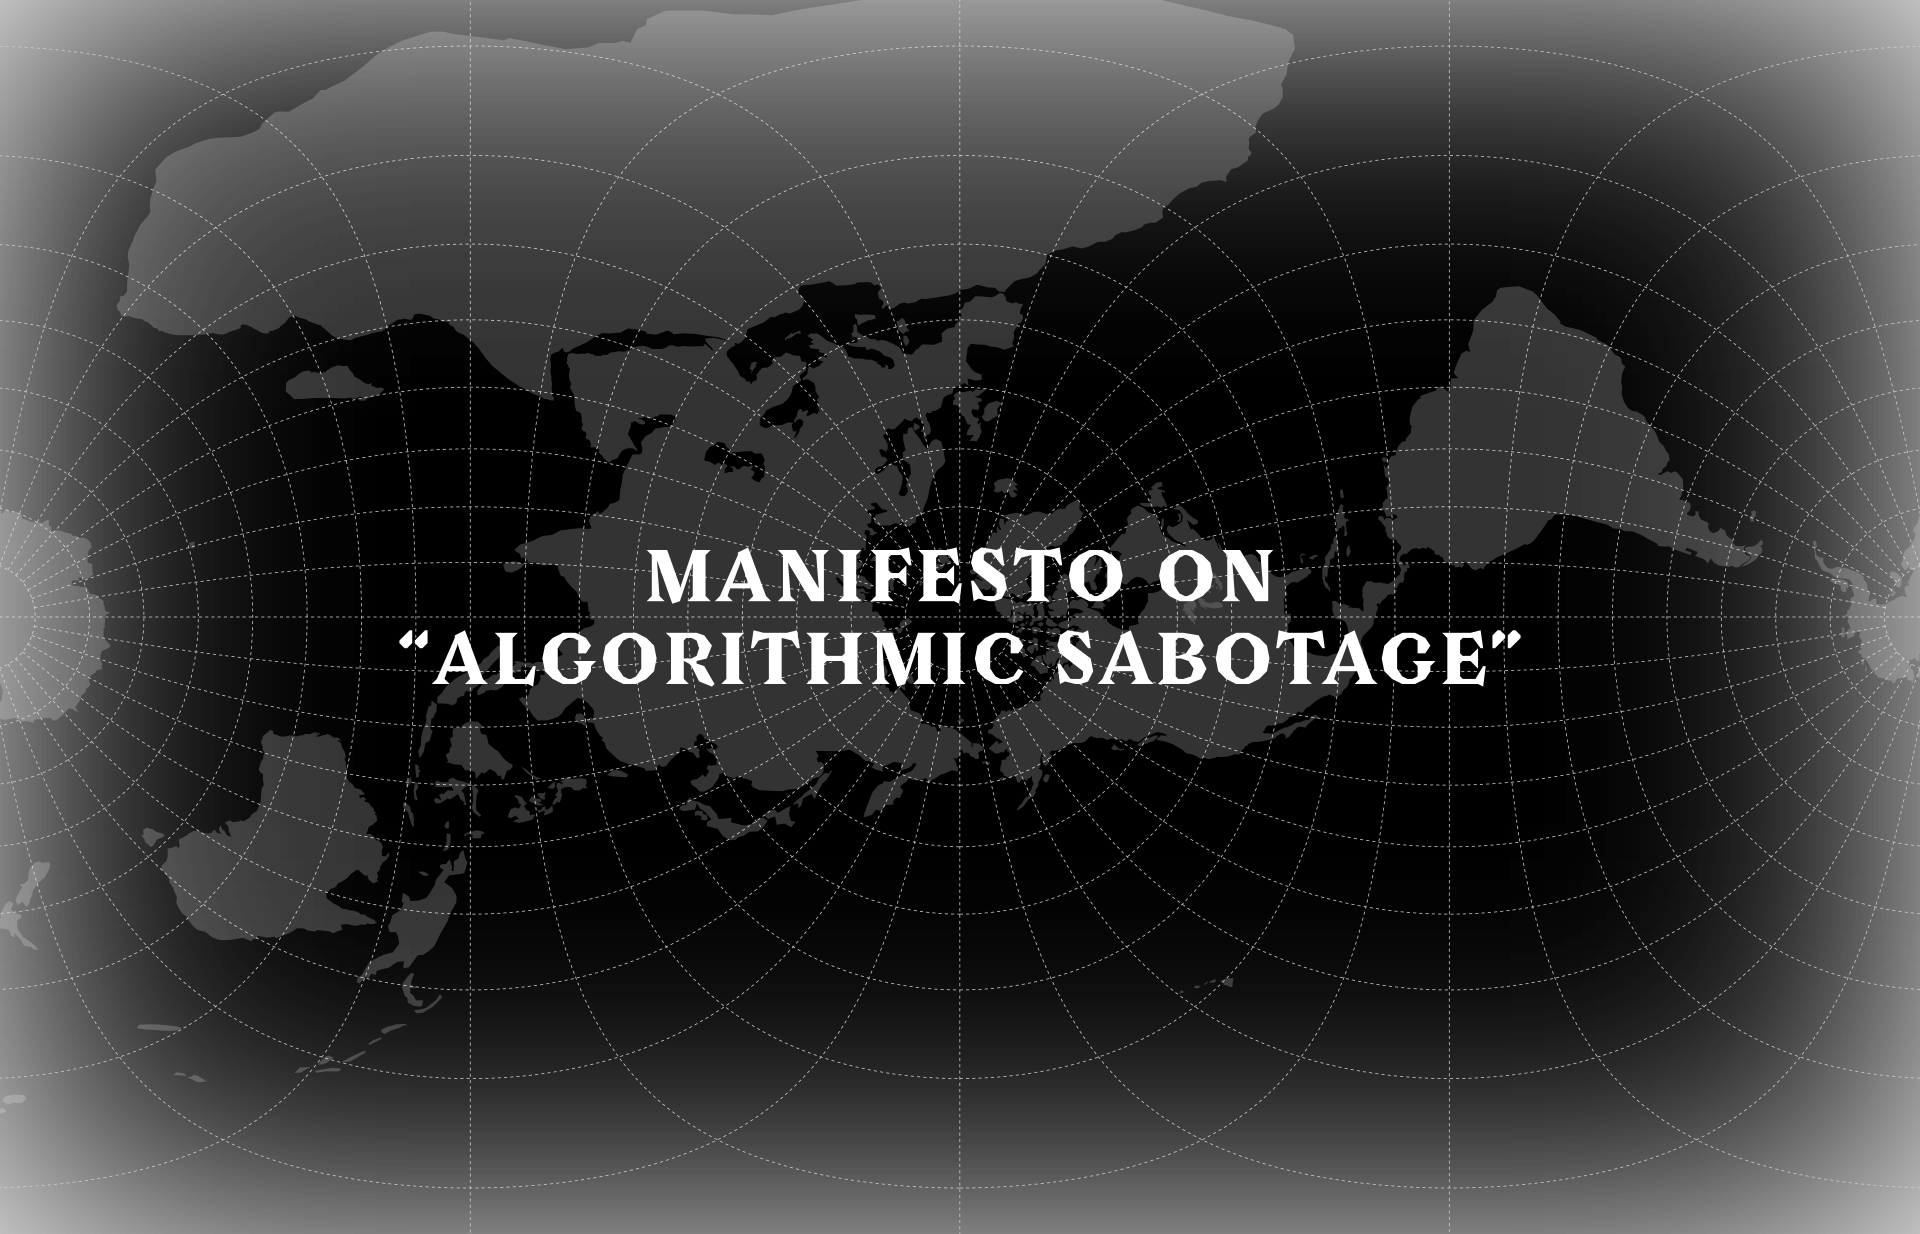 Manifesto on “Algorithmic Sabotage”